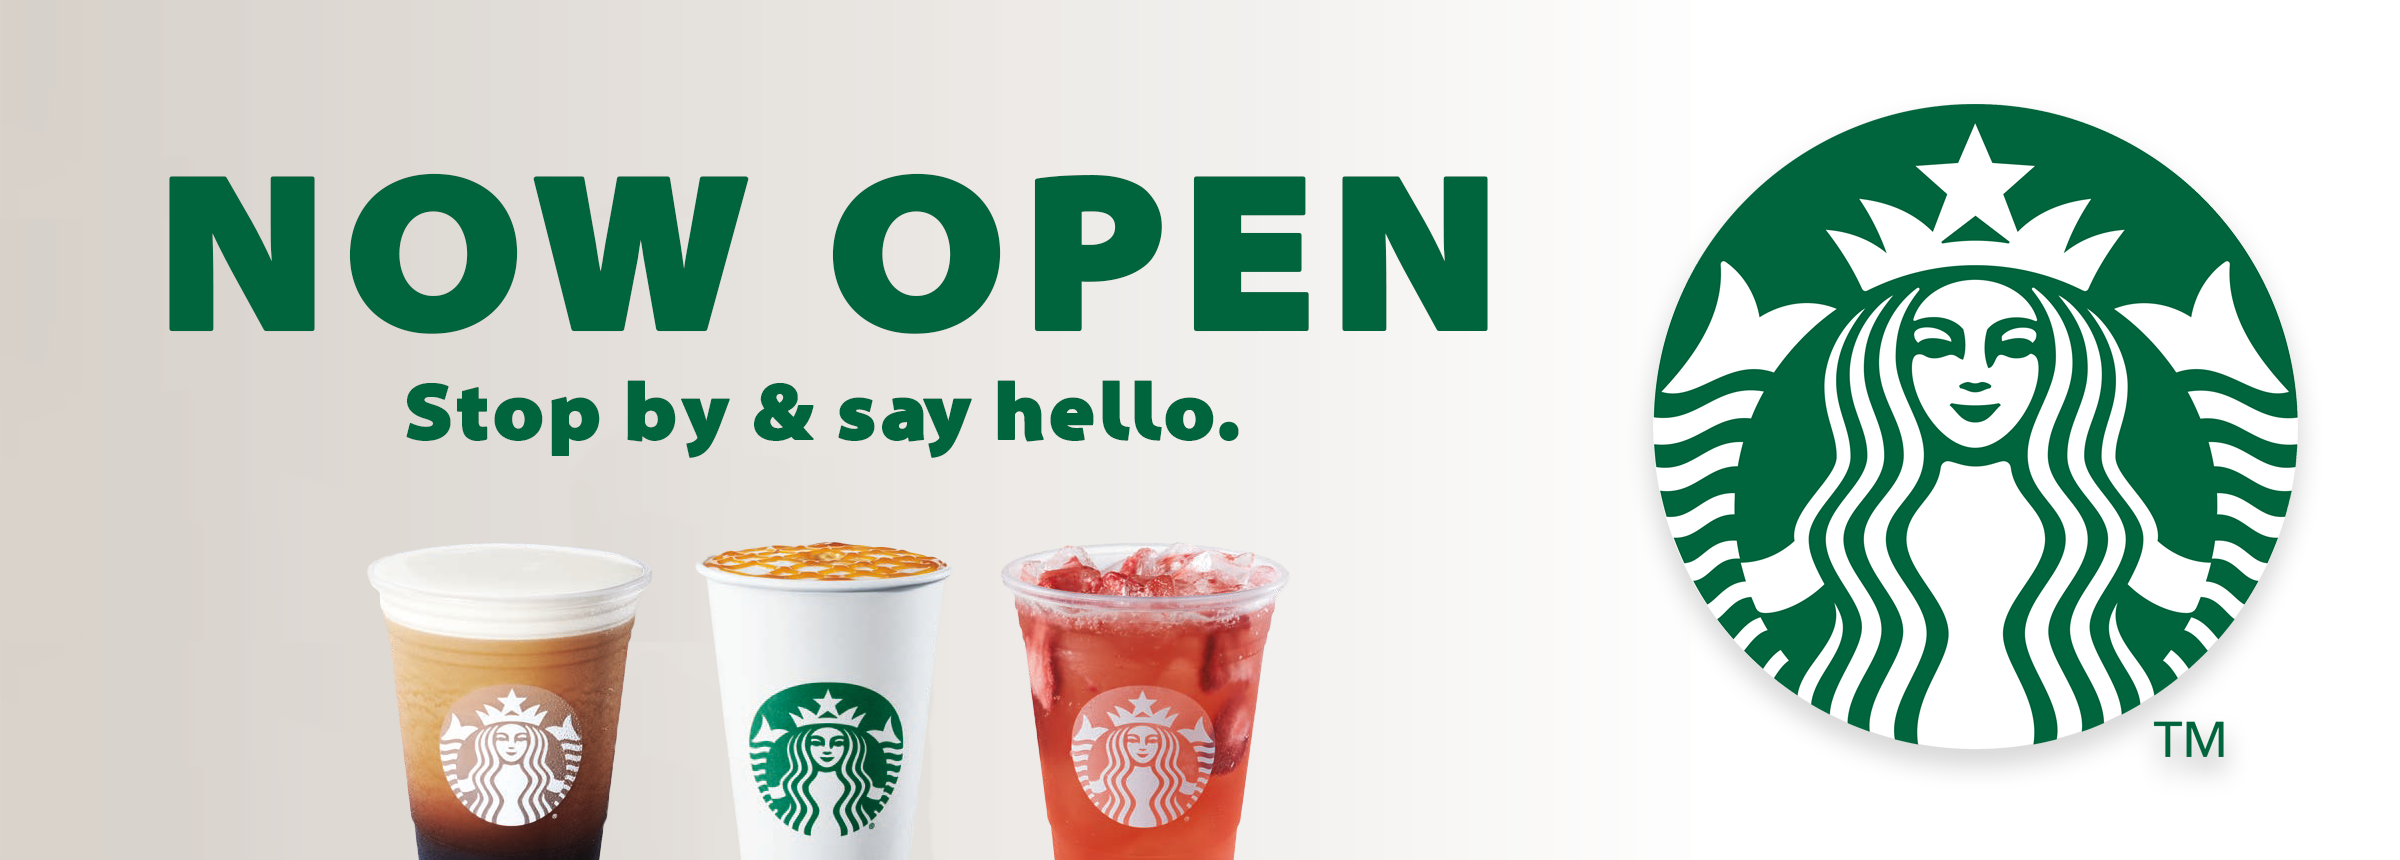 Starbucks Now Open Hero Image